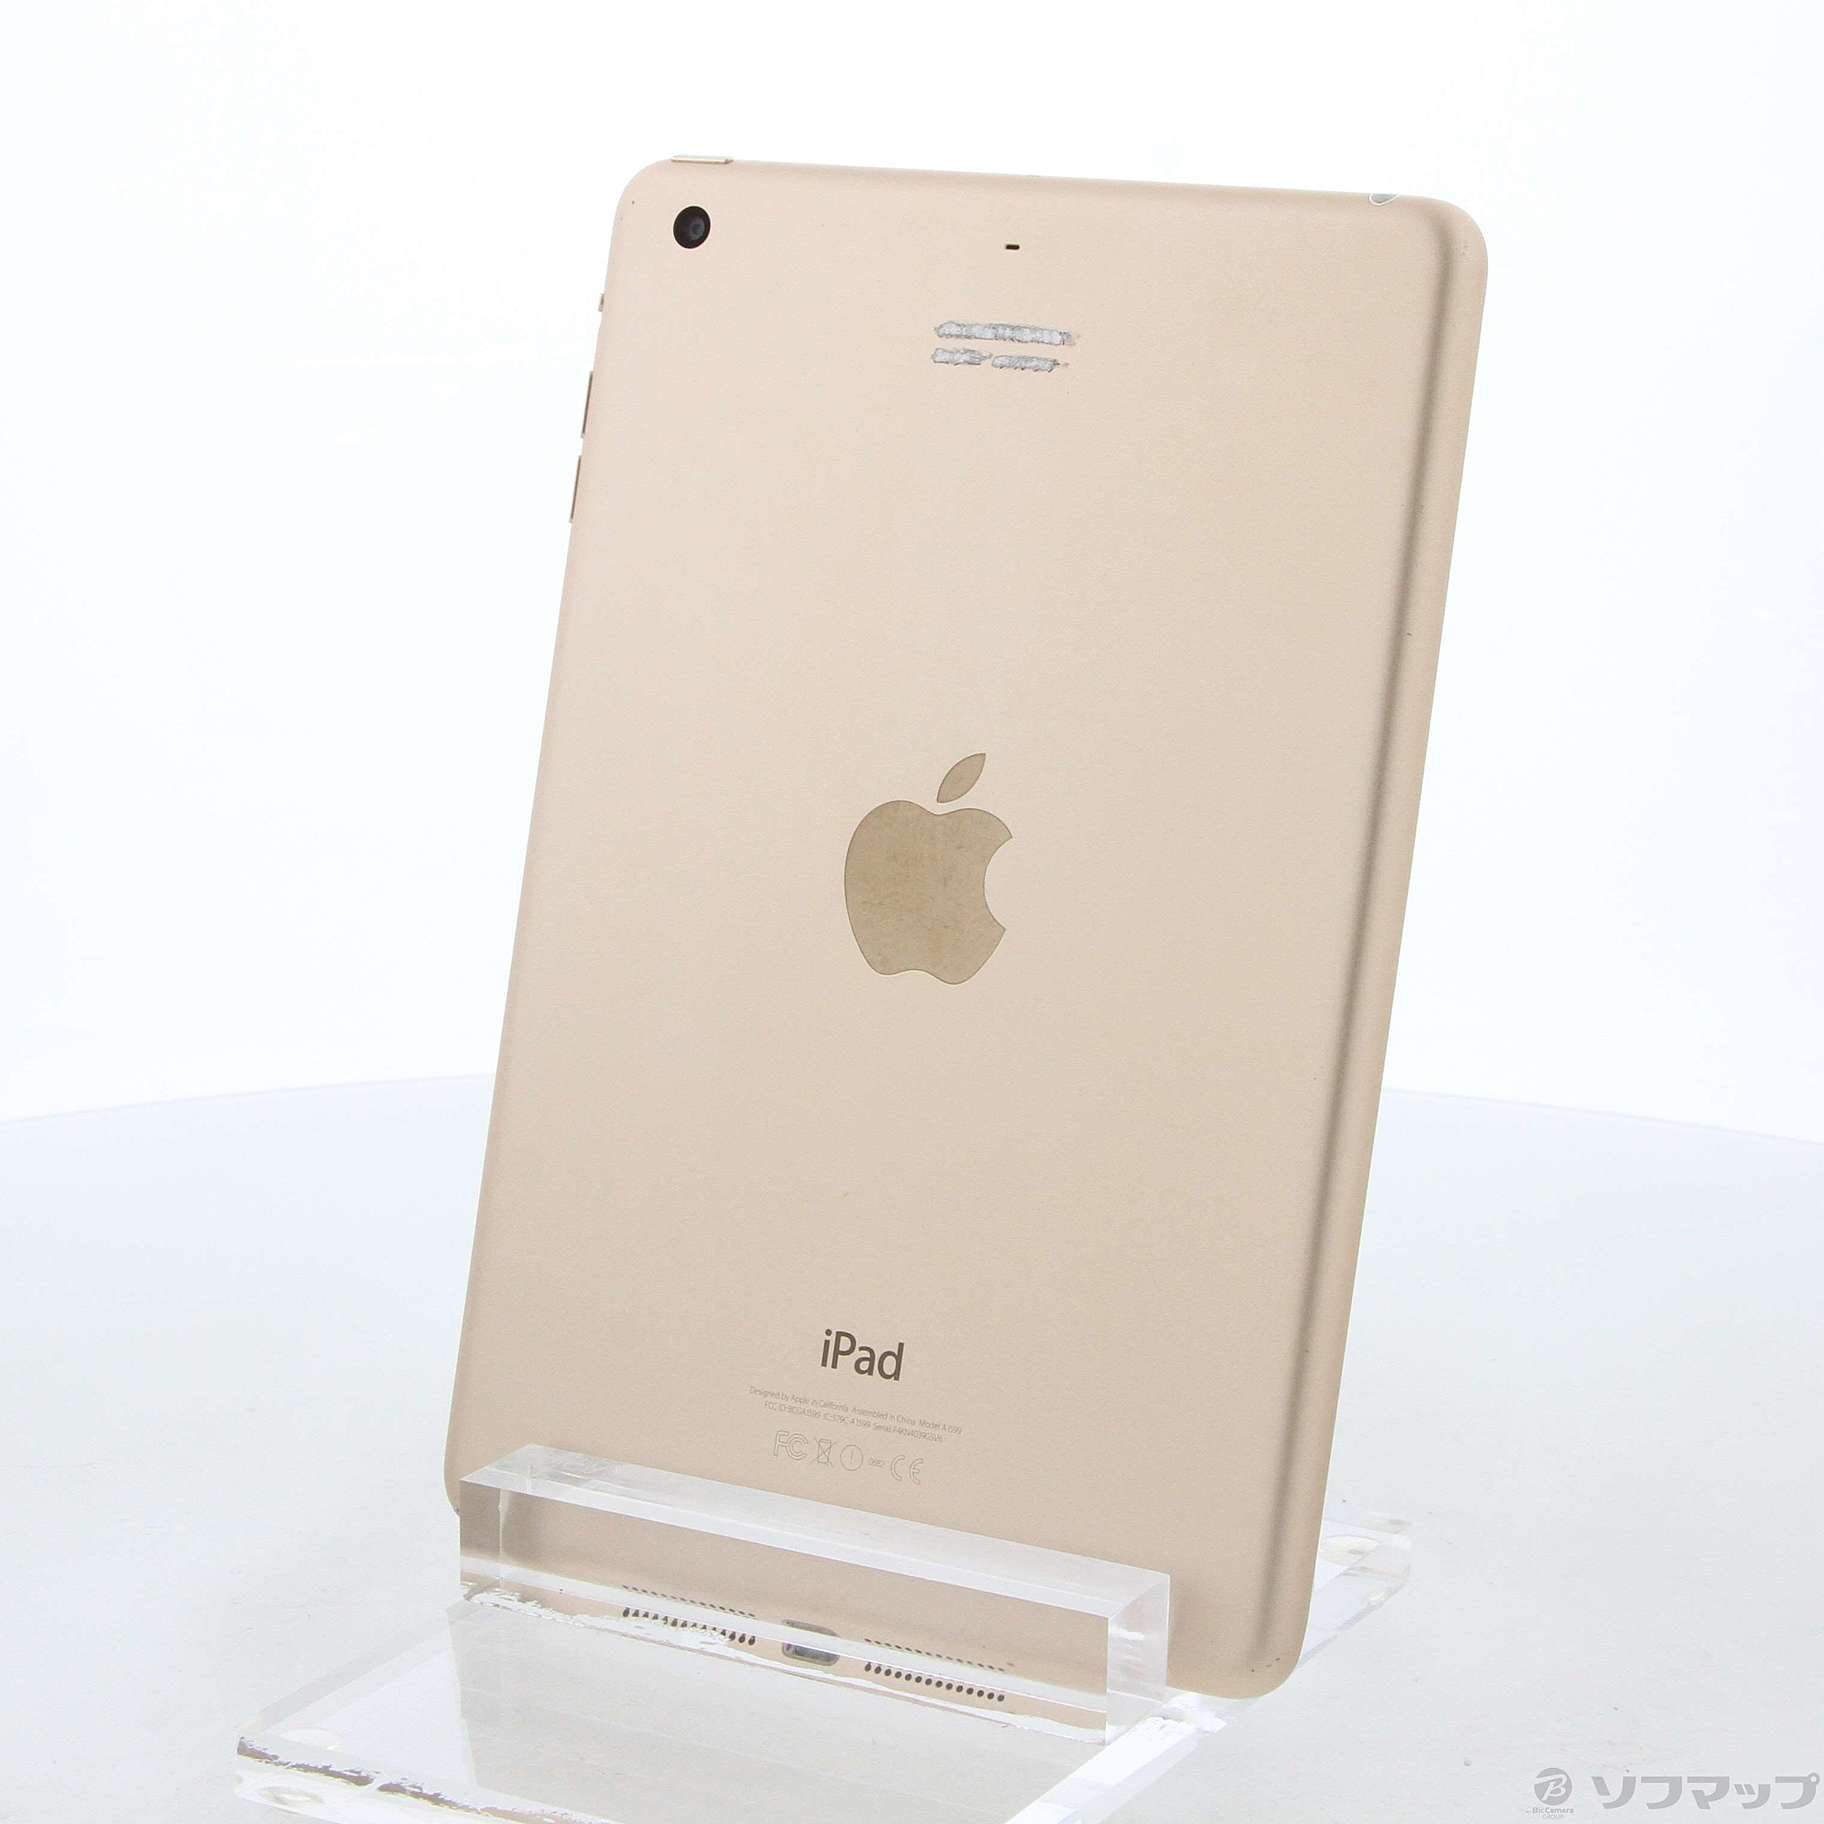 Appleアップル iPad mini 3 WiFi 64GB ゴールド